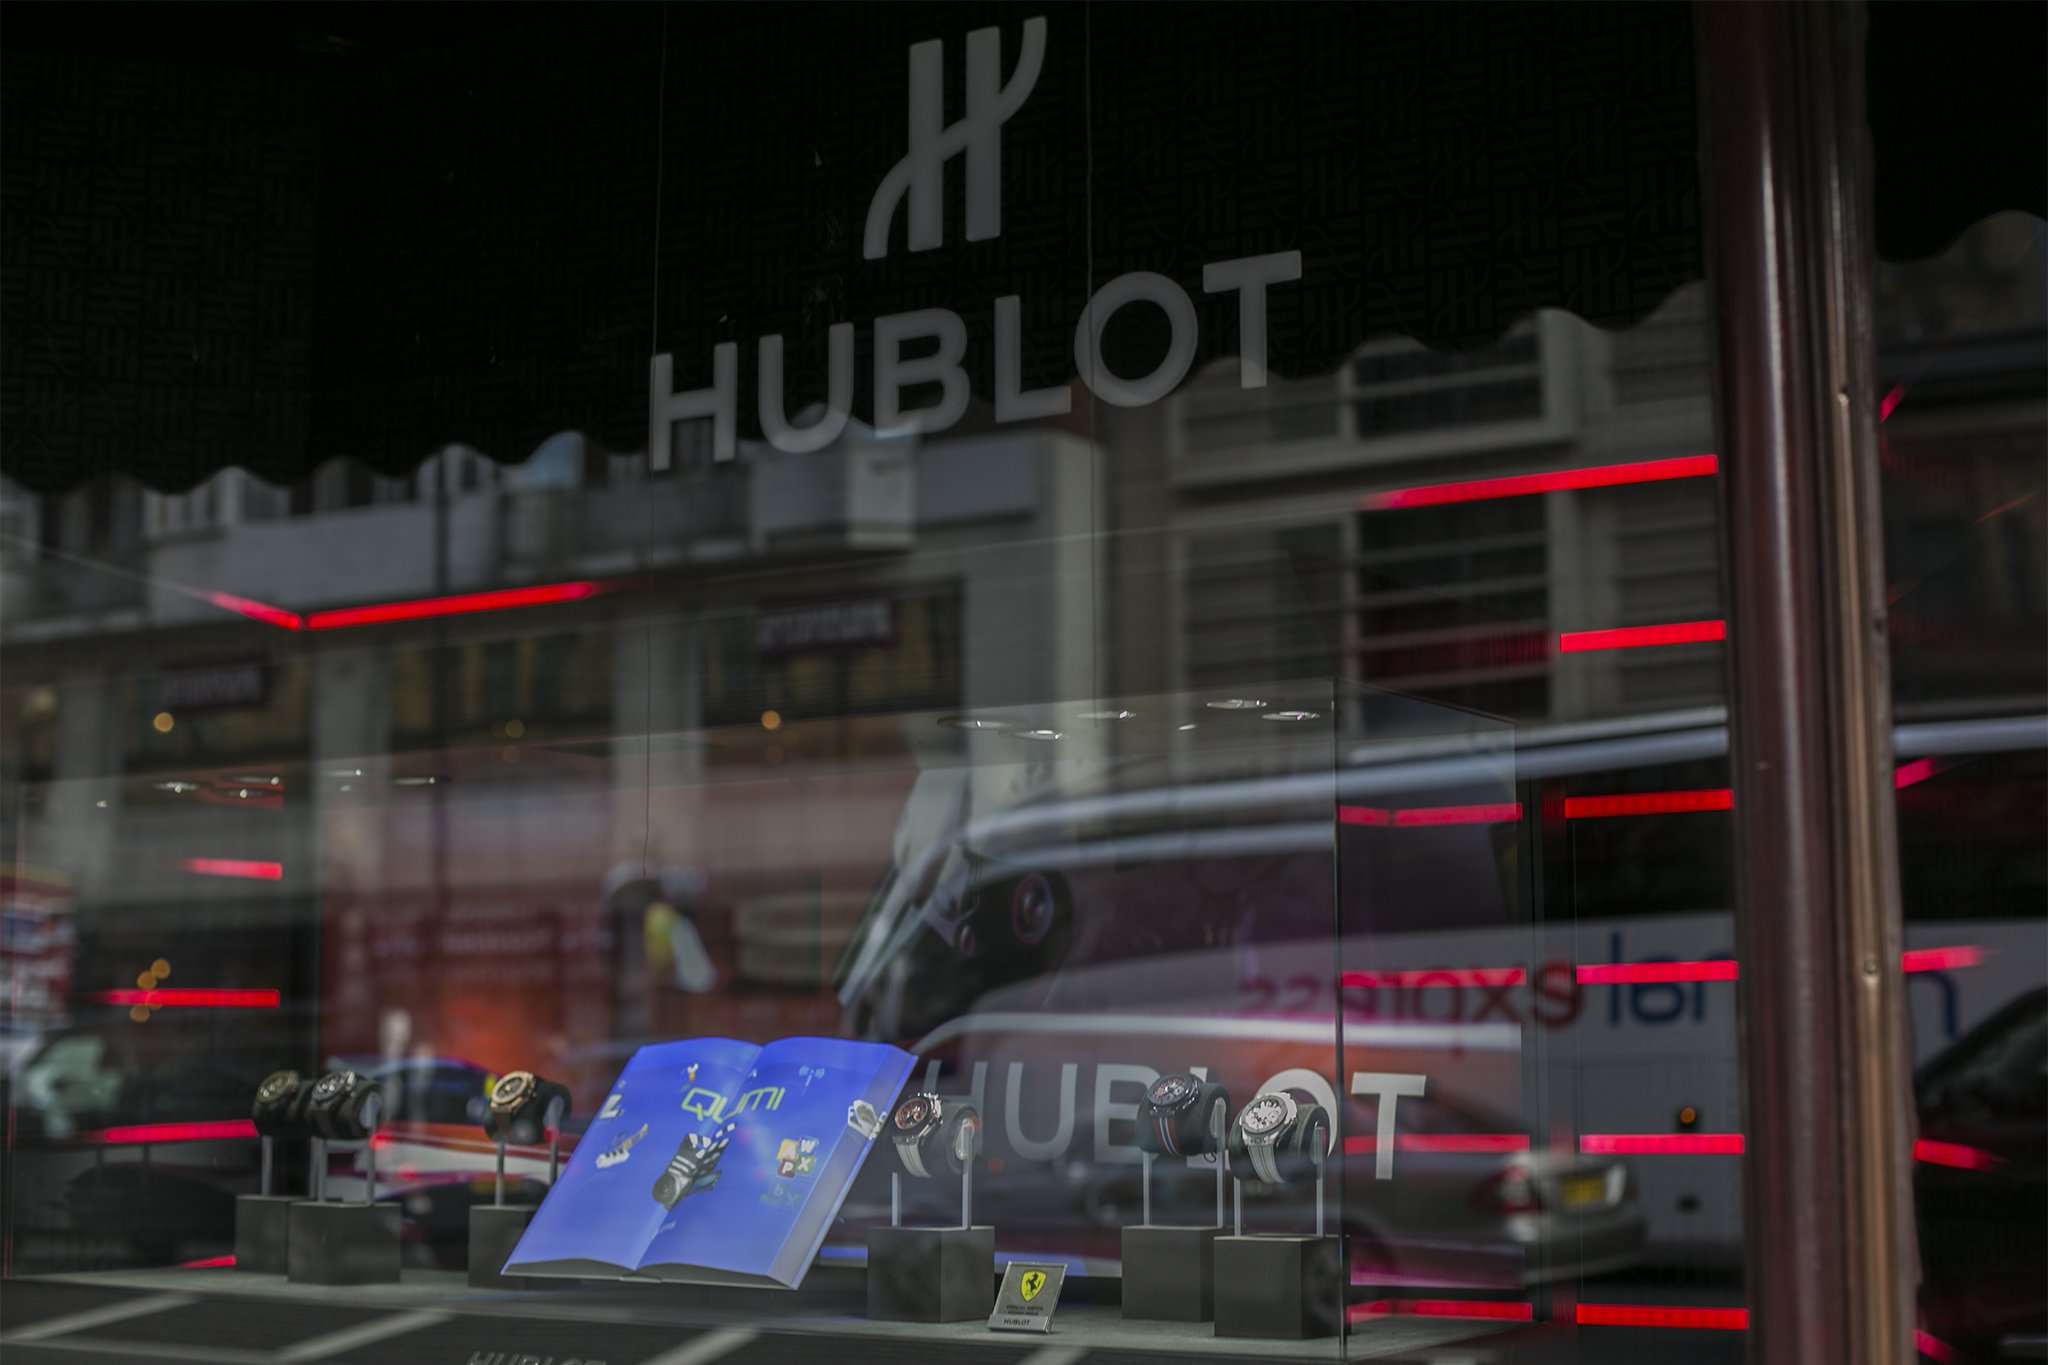 Hublot Fluorescent Fusion Exhibition Windows at Harrods 2015